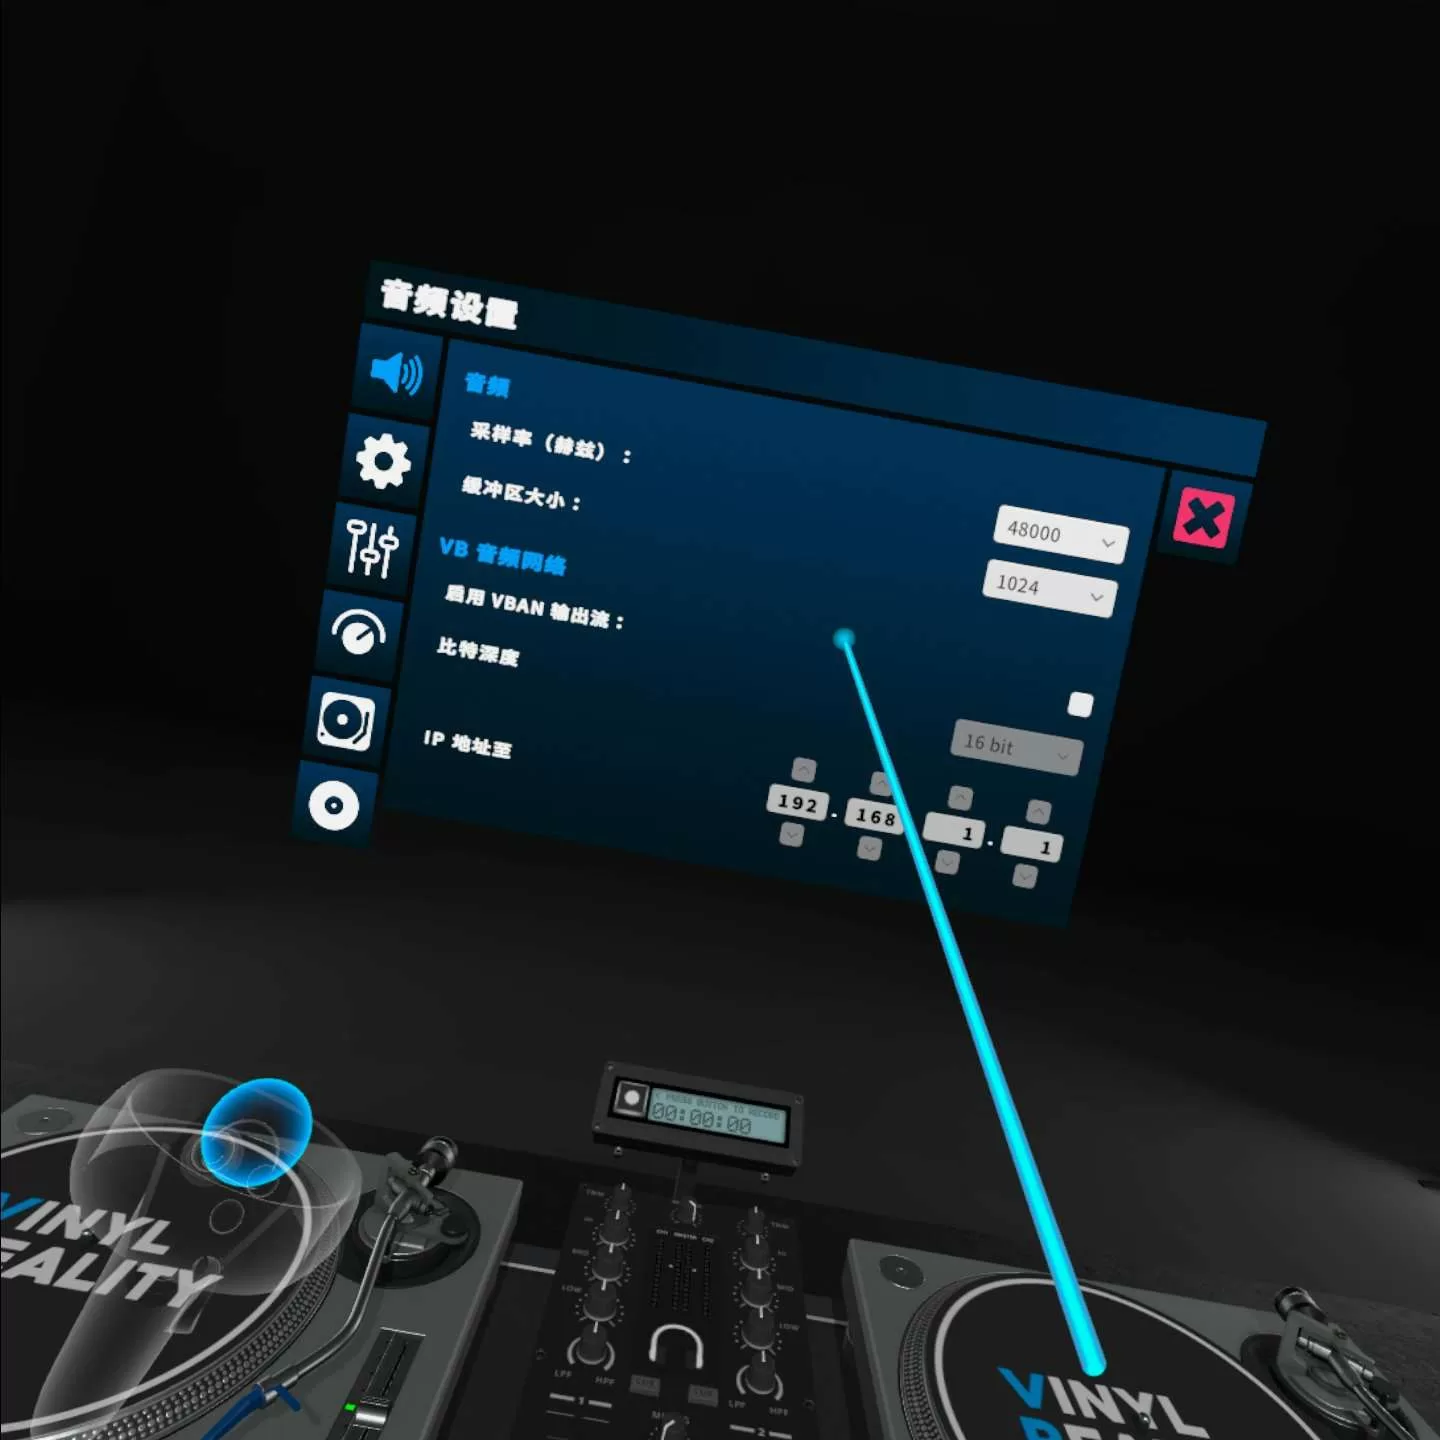 Oculus Quest 游戏《混合现实DJ模拟器 汉化中文版》Vinyl Reality Lite